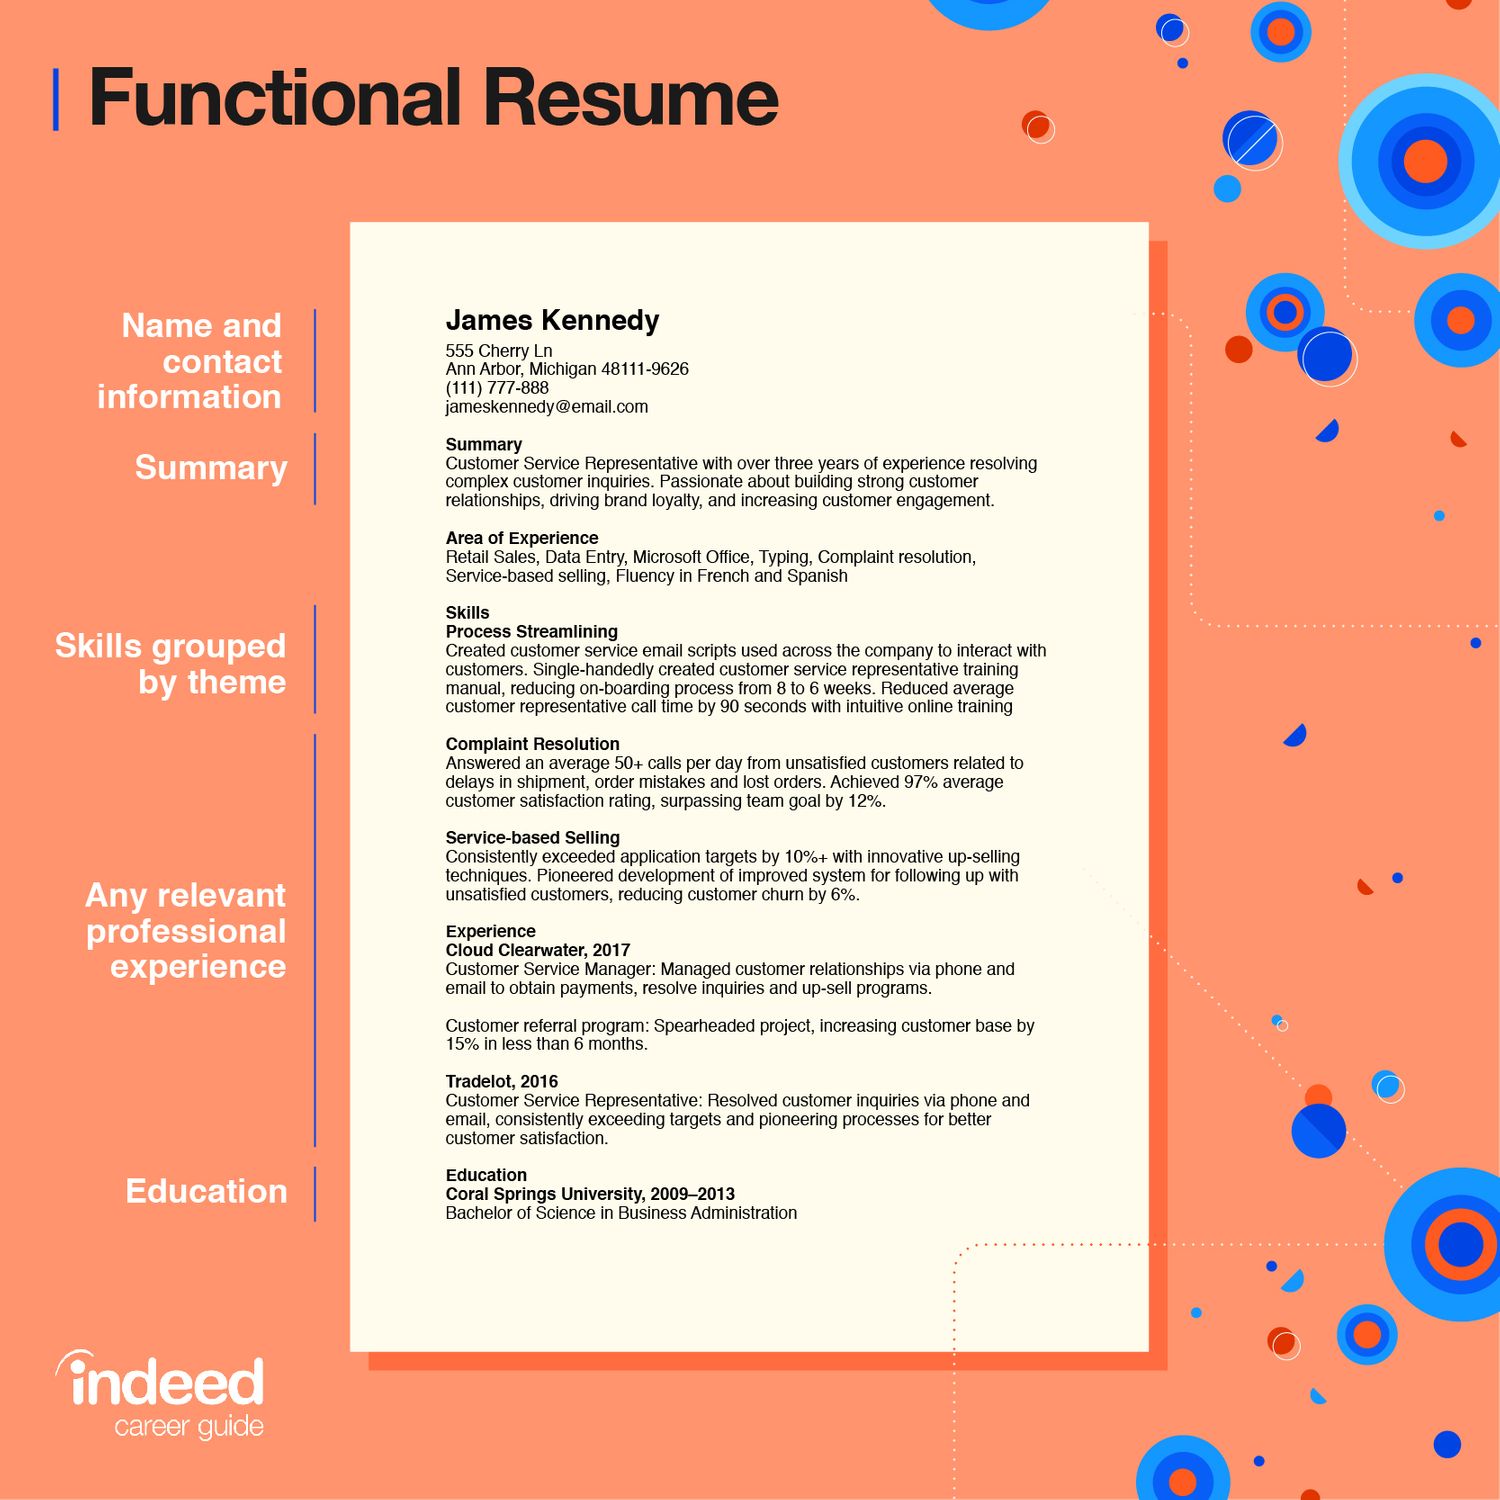 Functional Resume Format